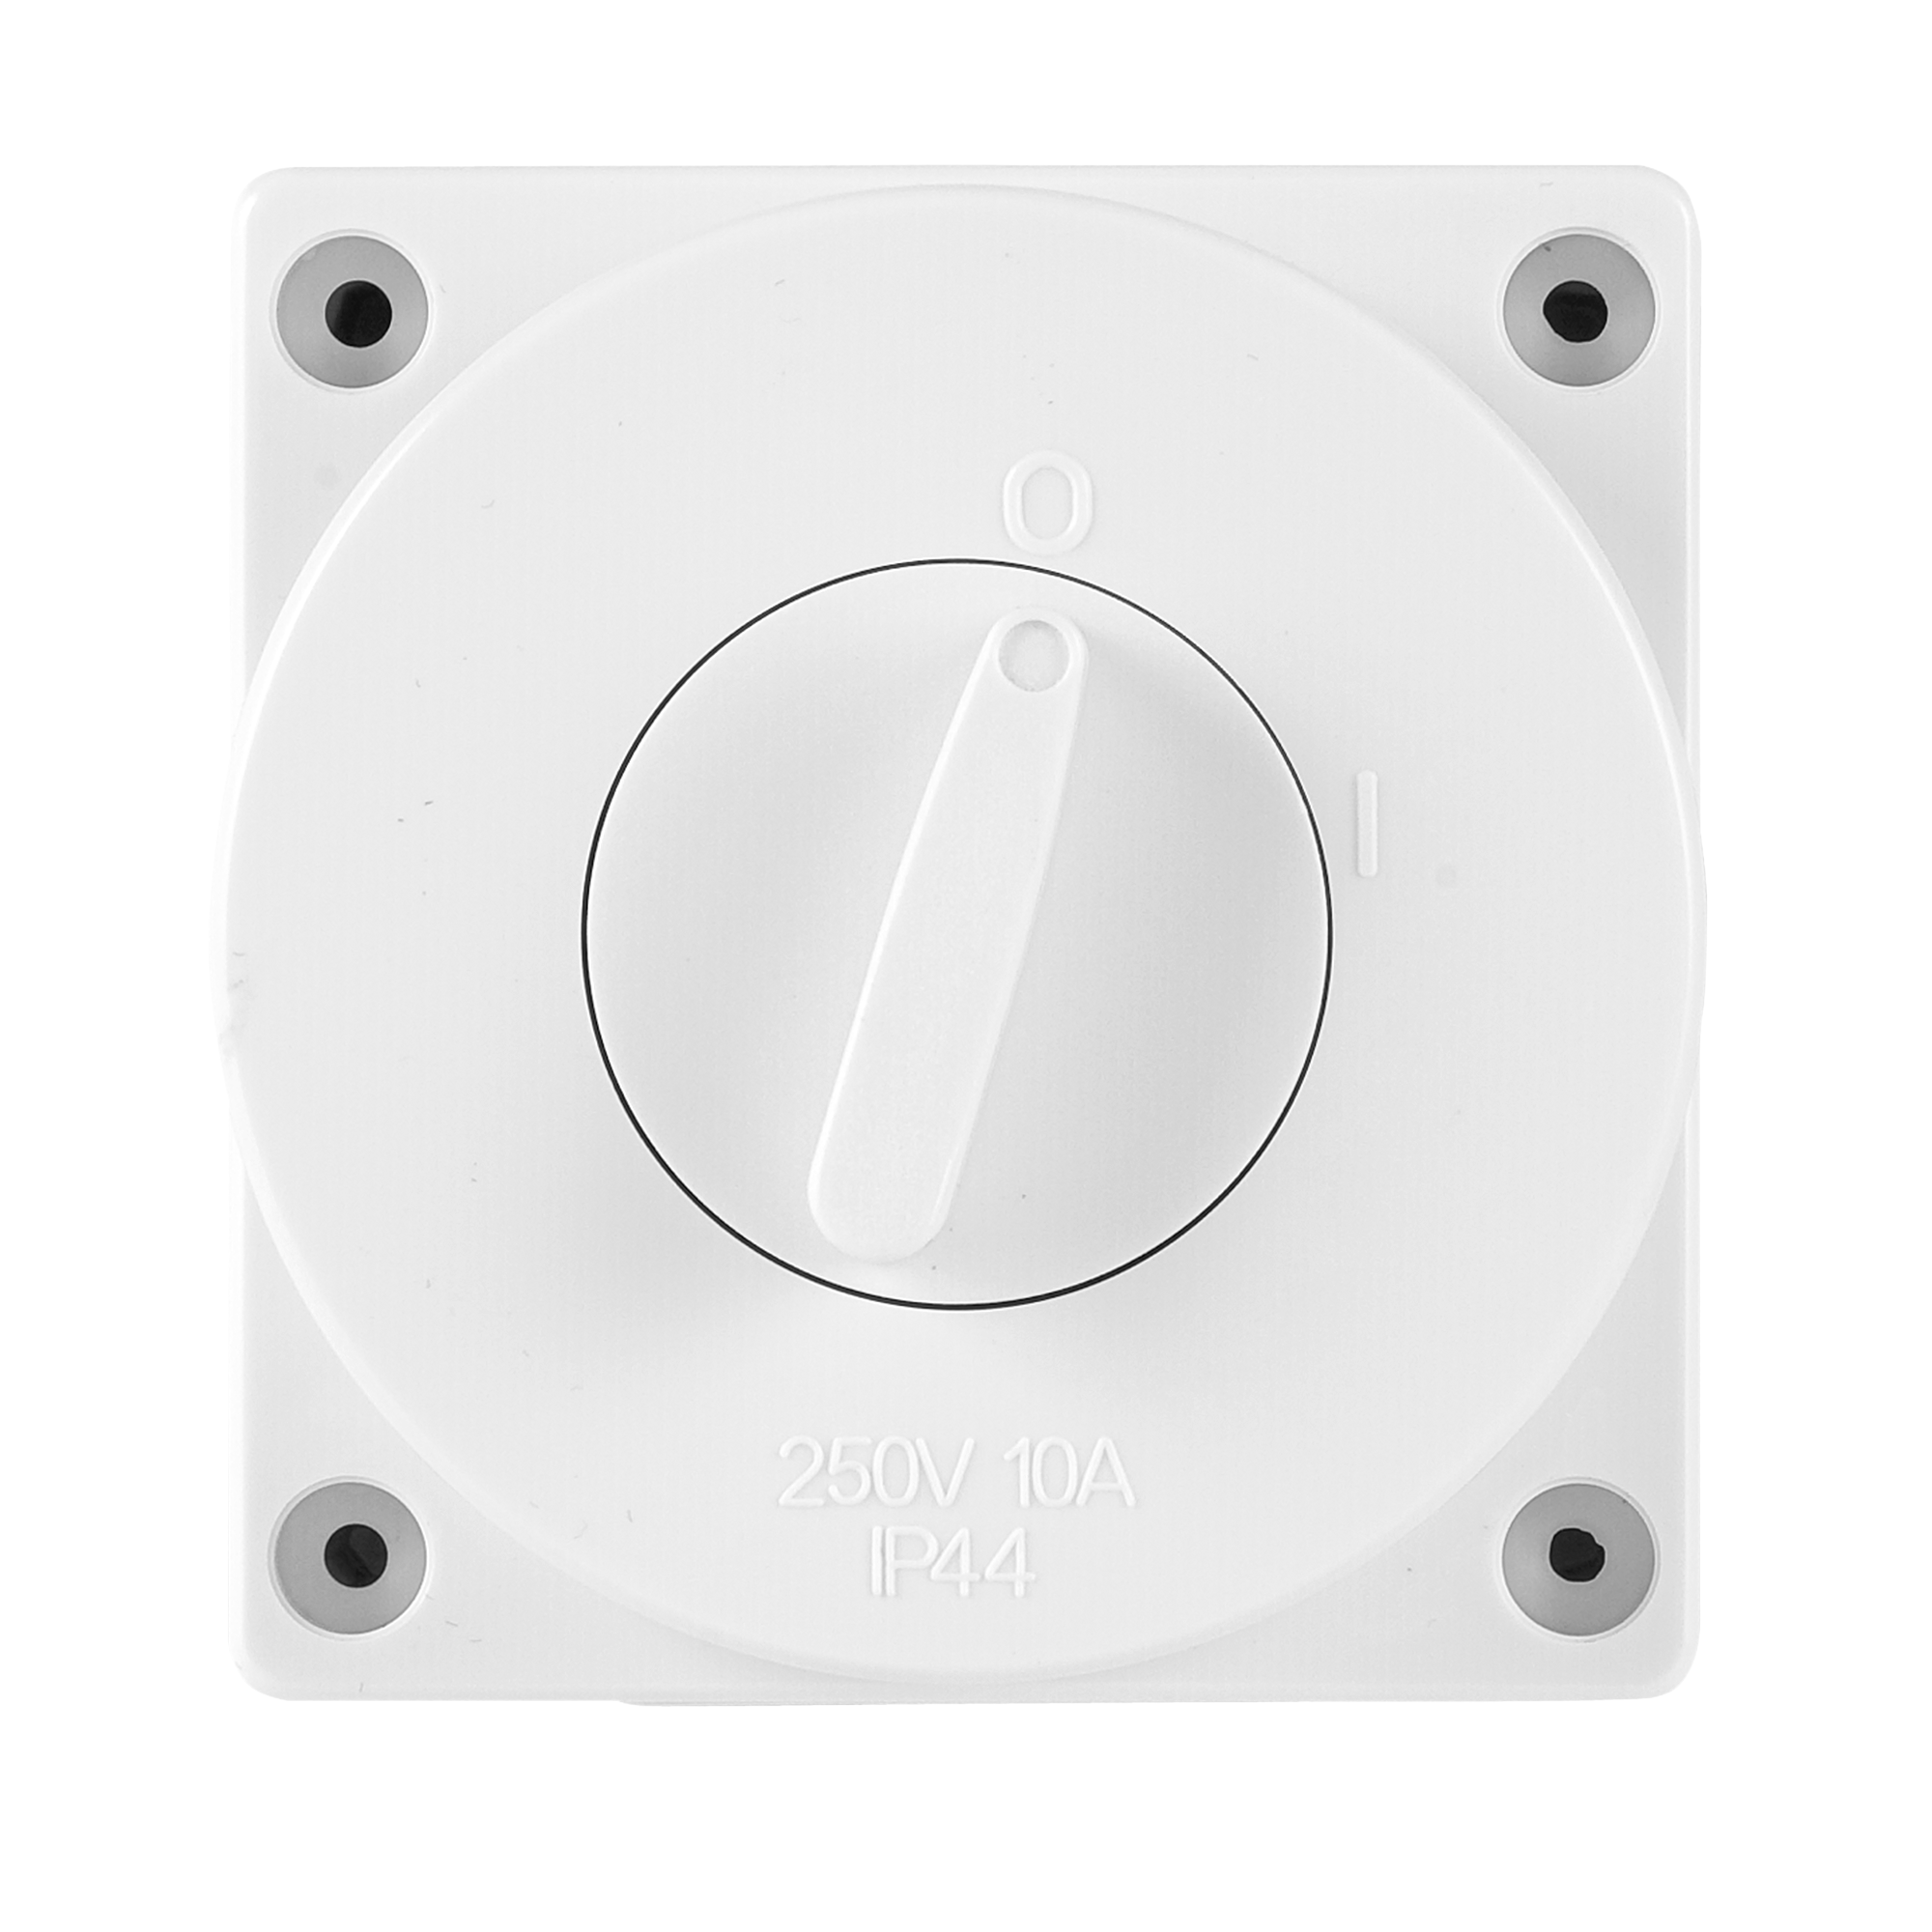  White waterproof single switch